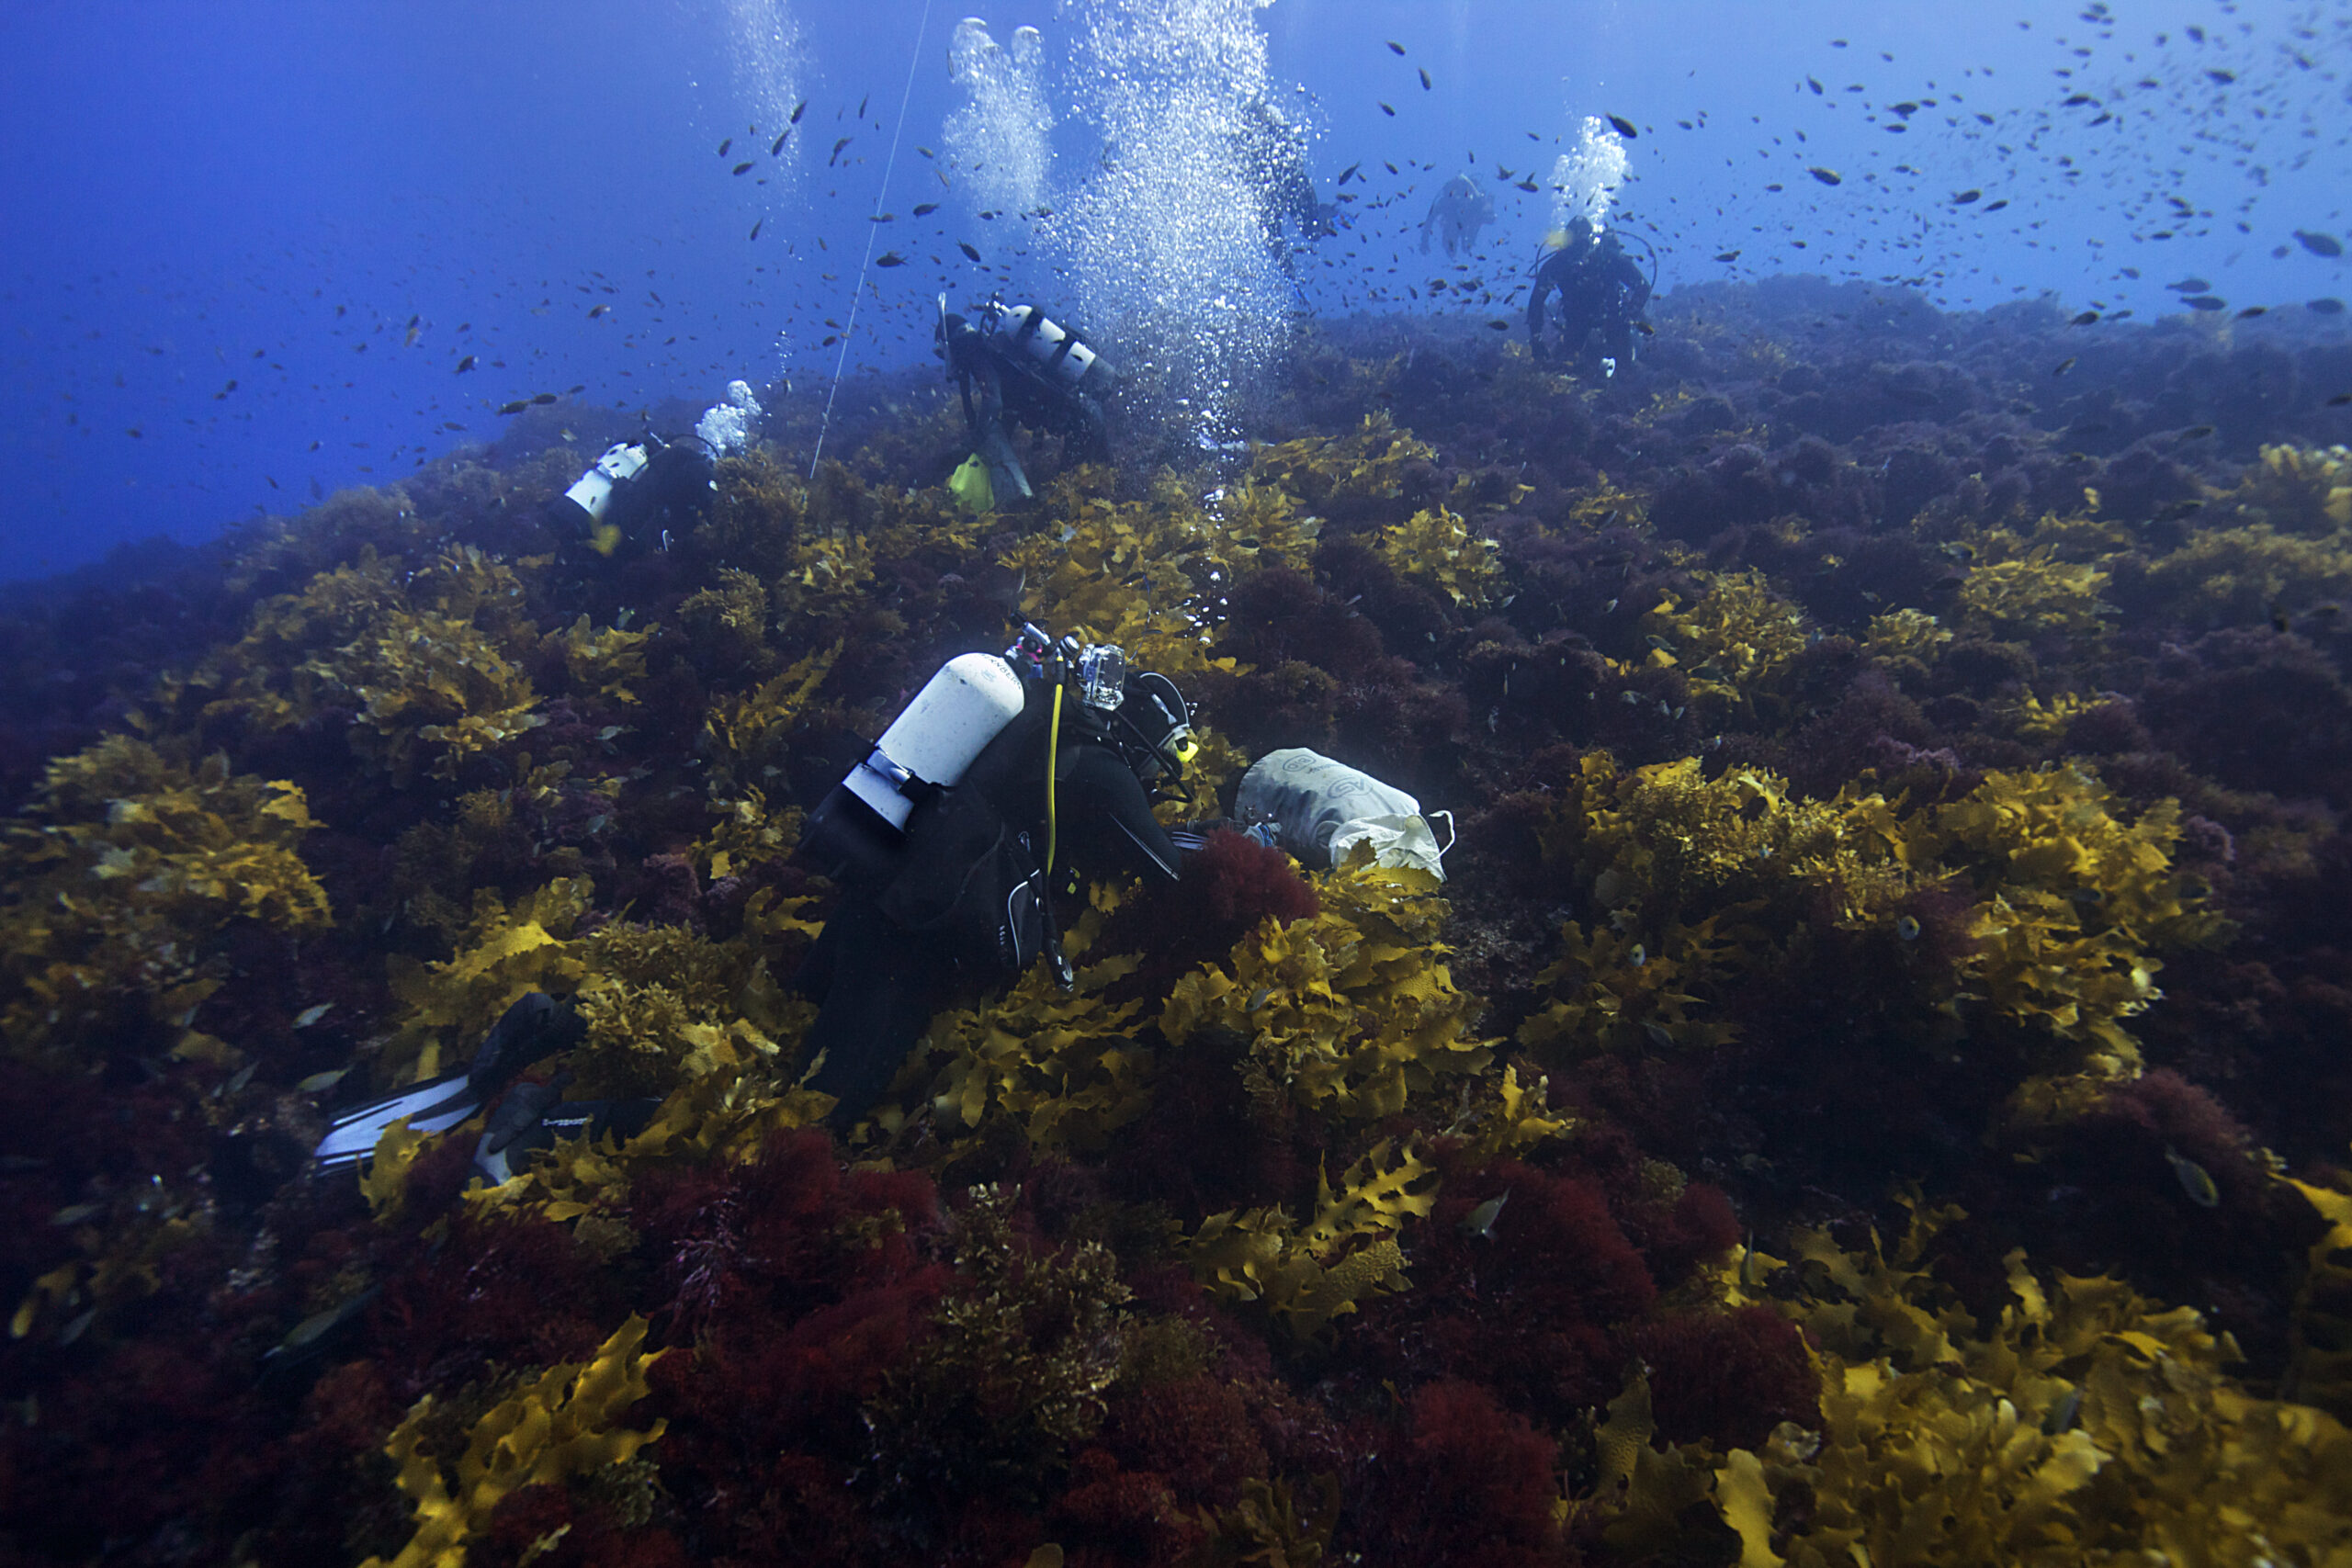 Researchers using SCUBA gear survey a kelp site